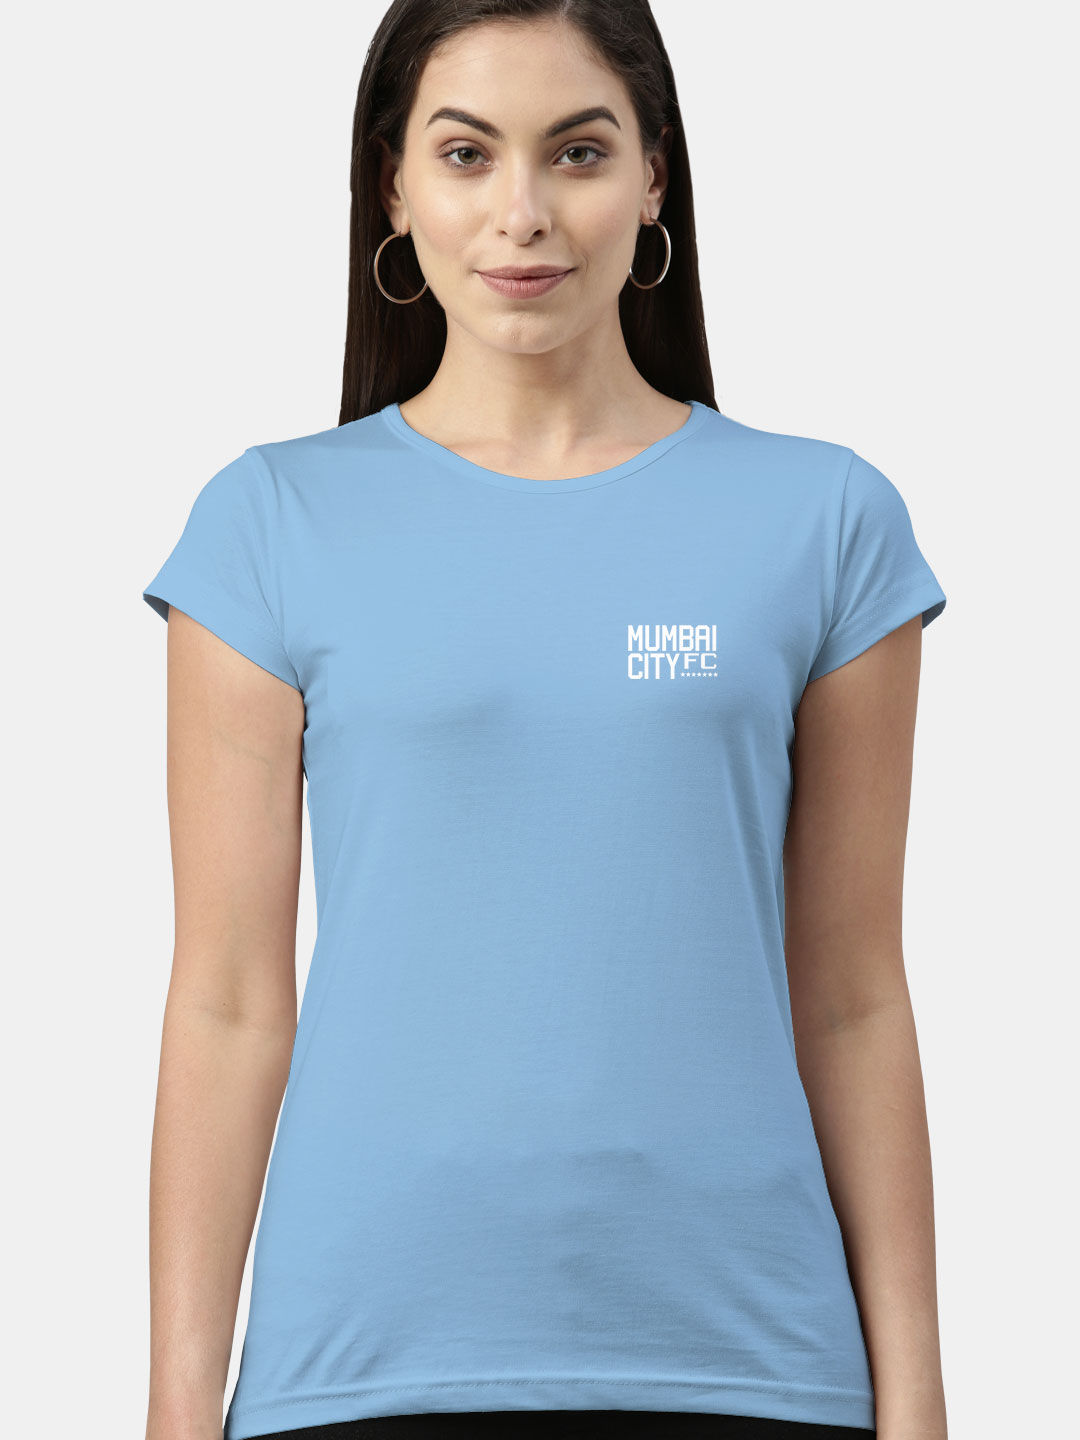 Buy MCFC Aamchi City - Female Designer T-Shirts Light Blue T-Shirts Online